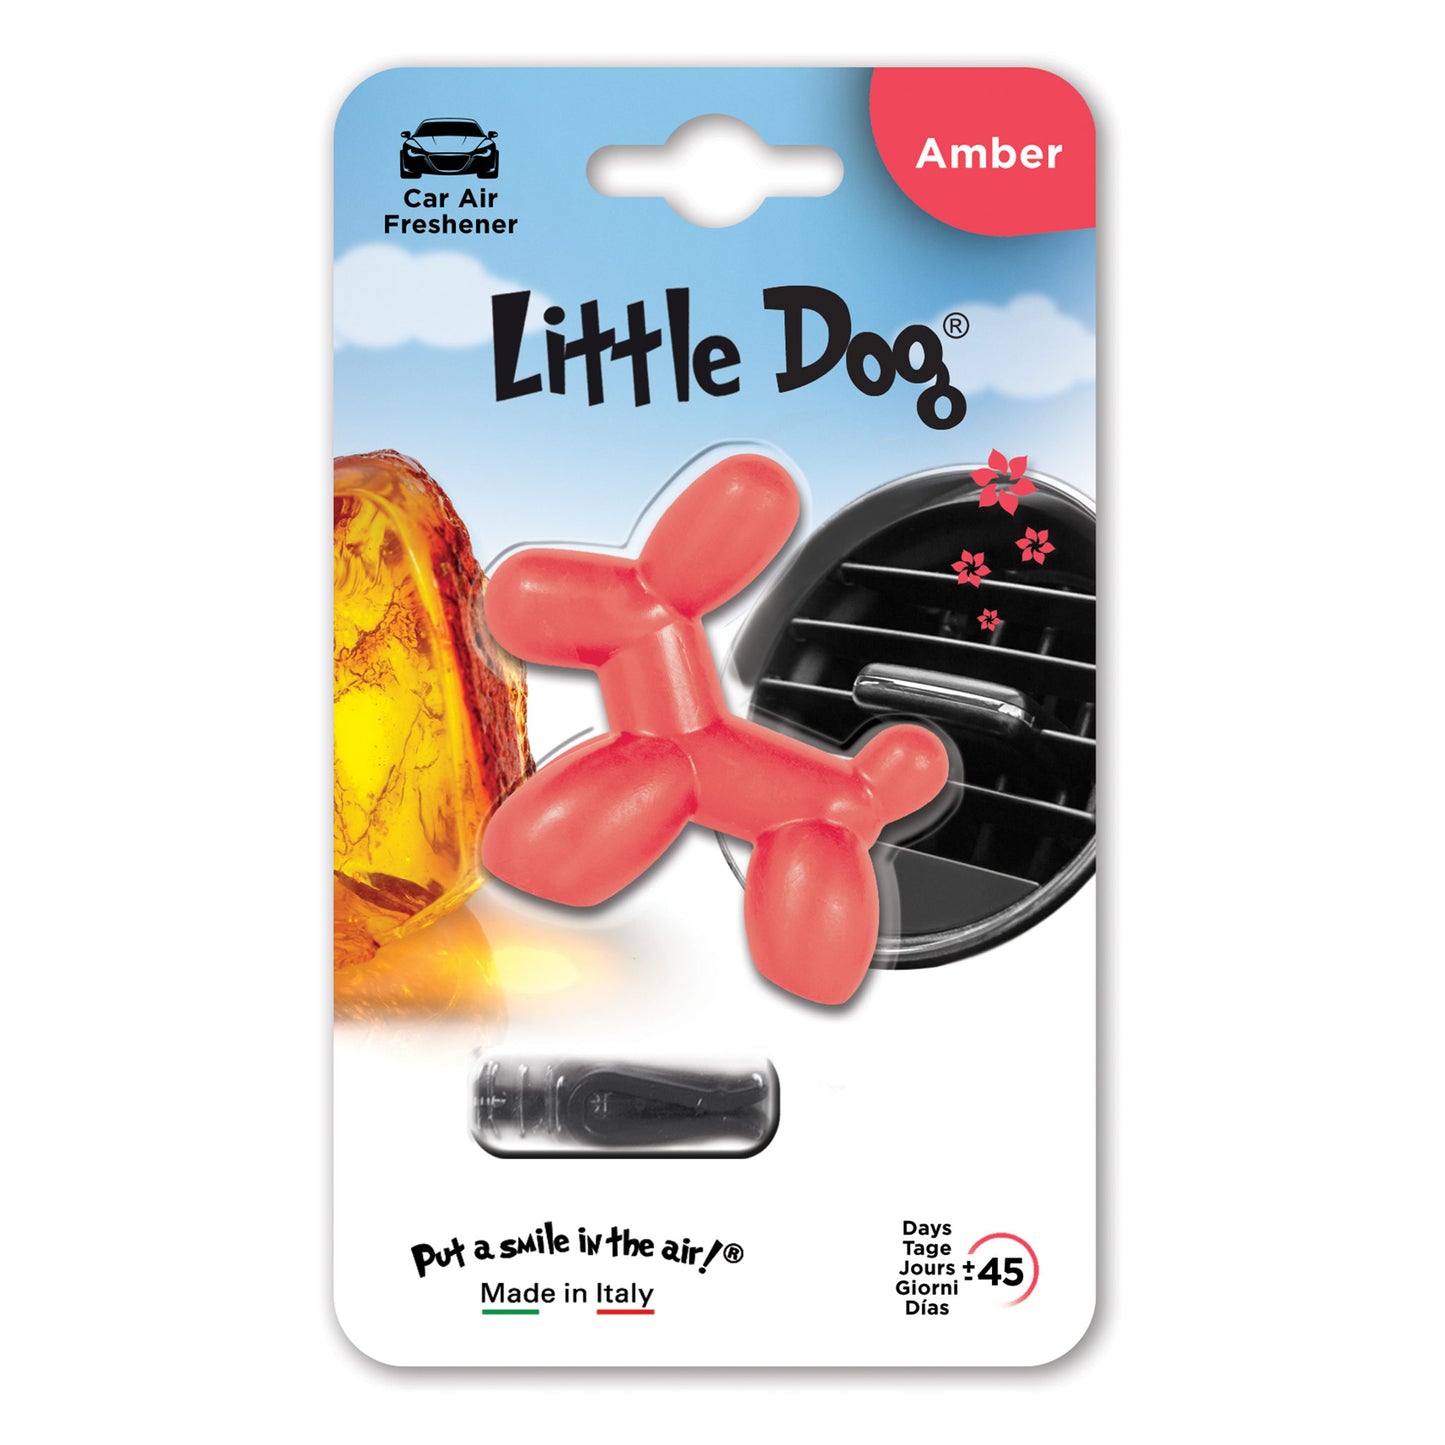 Little Dog®